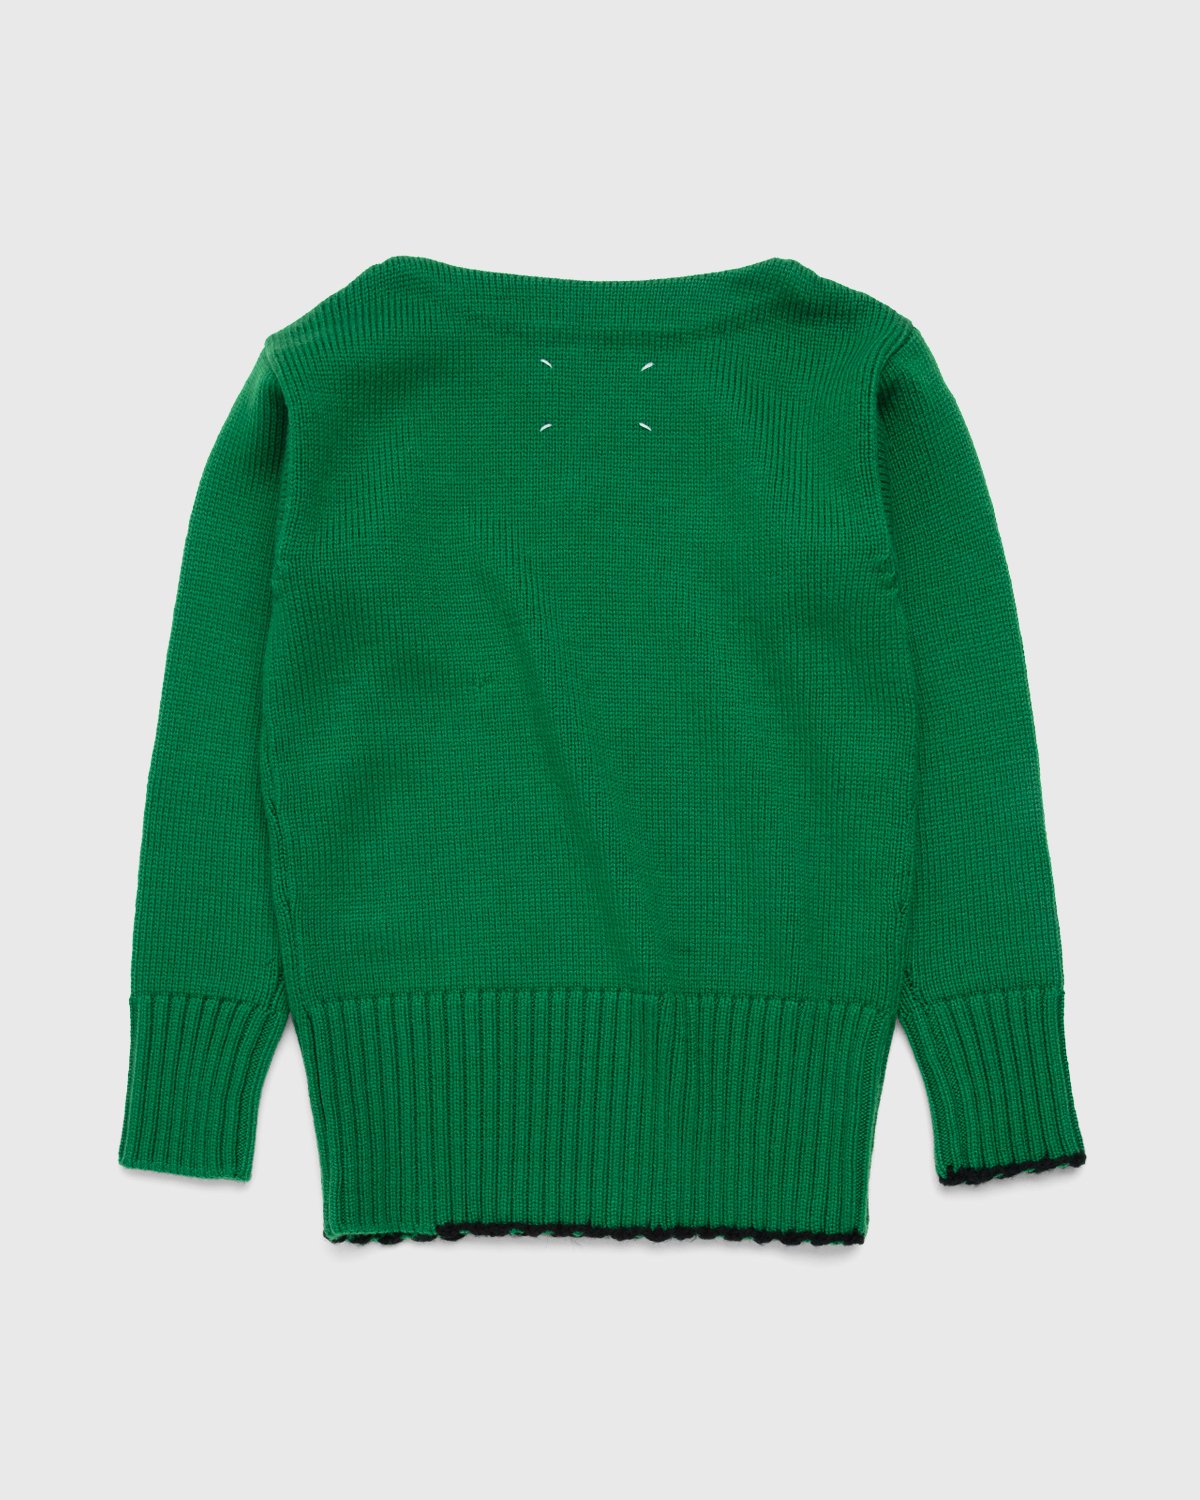 Maison Margiela - Summer Camp Sweater Green - Clothing - Green - Image 2